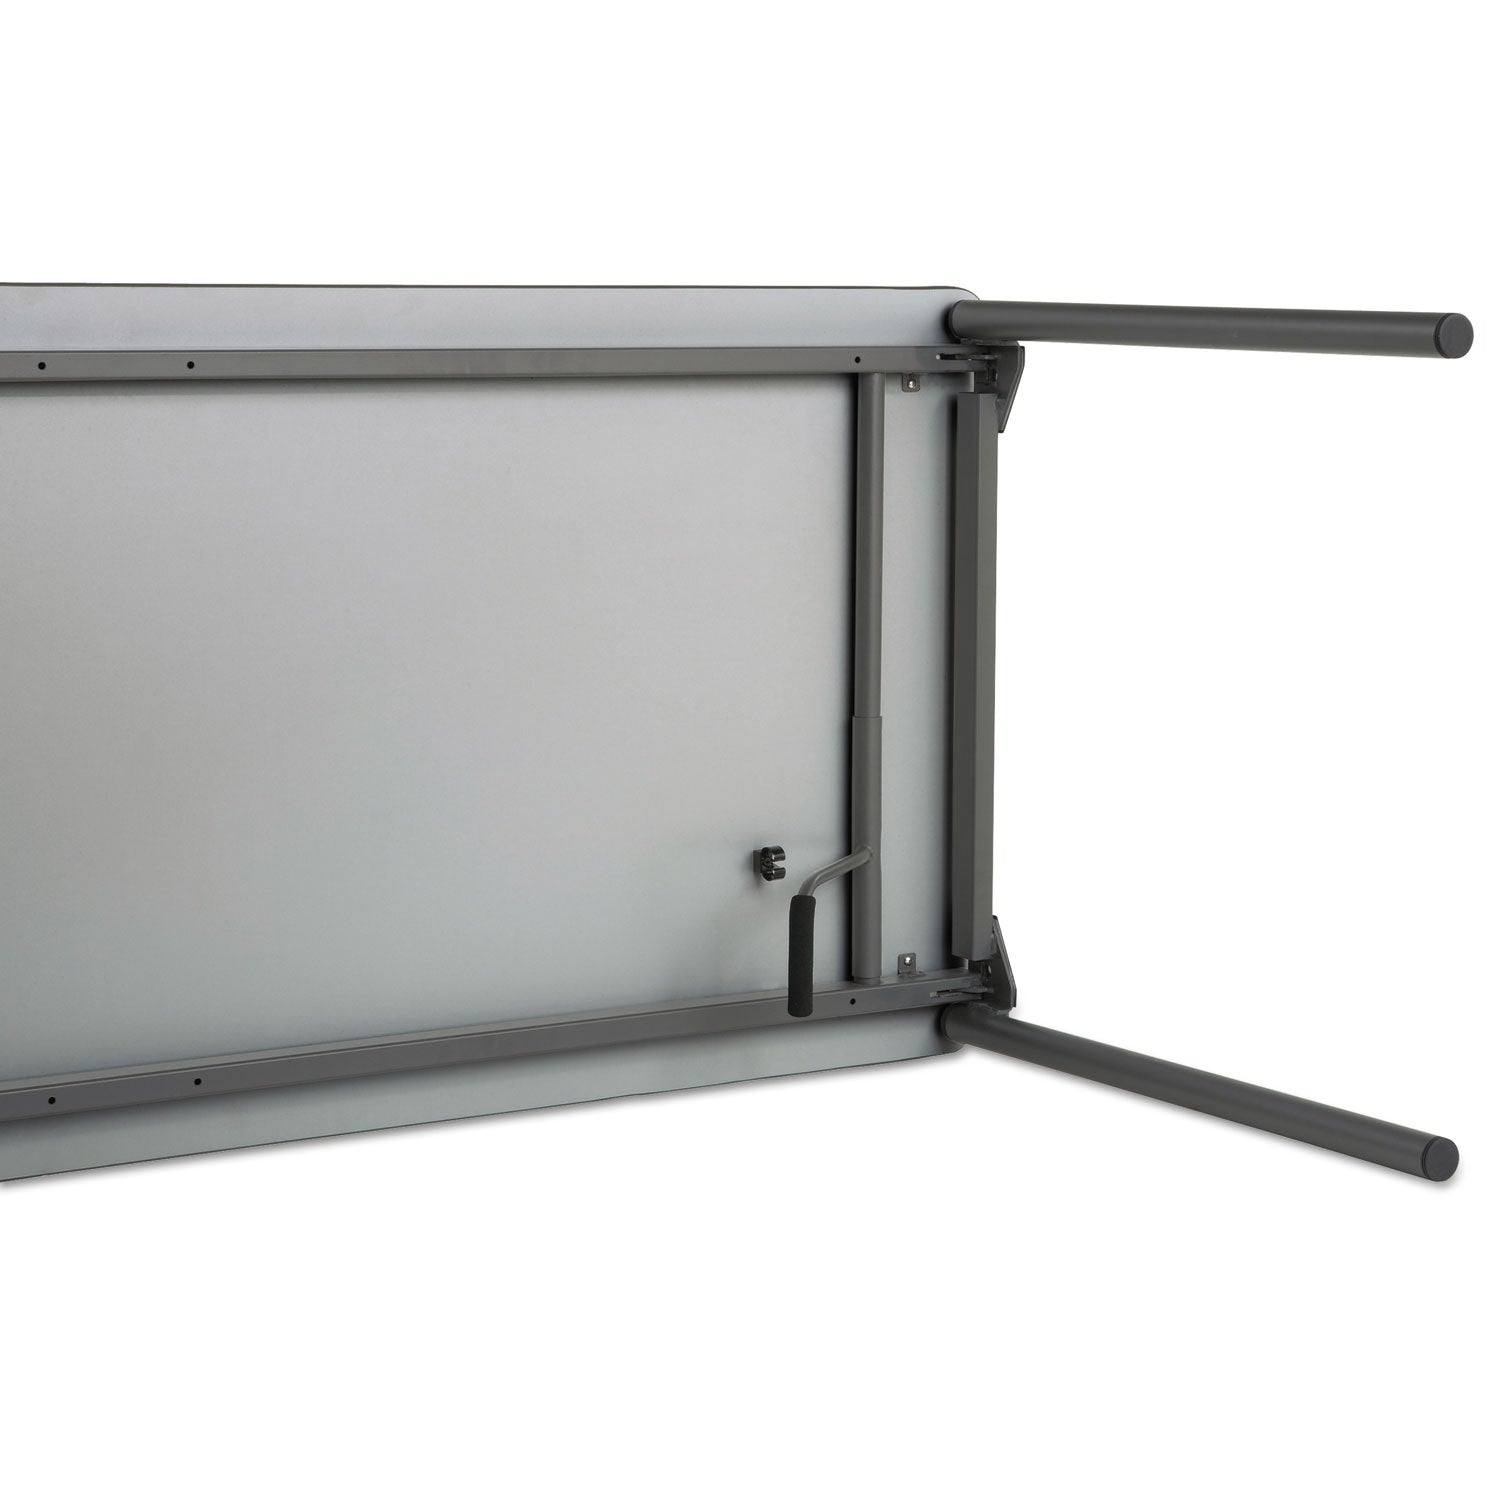 Maxx Legroom Wood Folding Table, Rectangular, 60" x 18" x 29.5", Gray/Charcoal - 